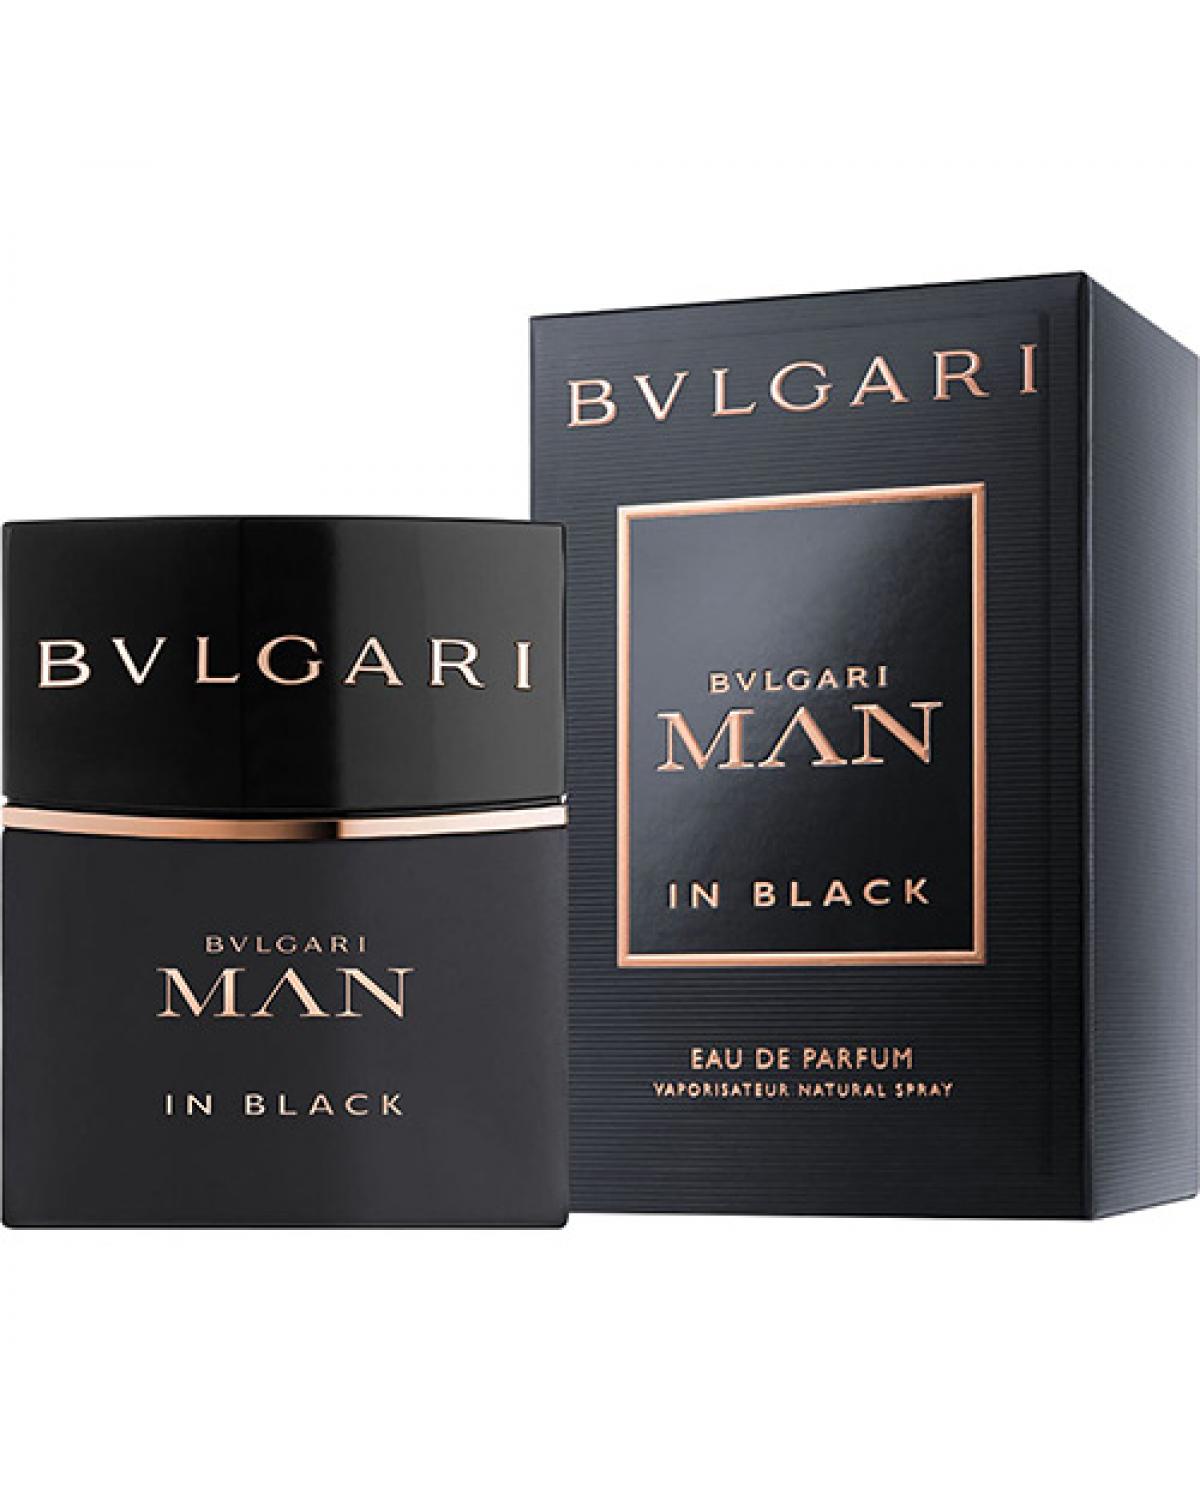 BVLGARI Man in Black BVLGARI - Perfume Masculino - Eau de Parfum - 30ml